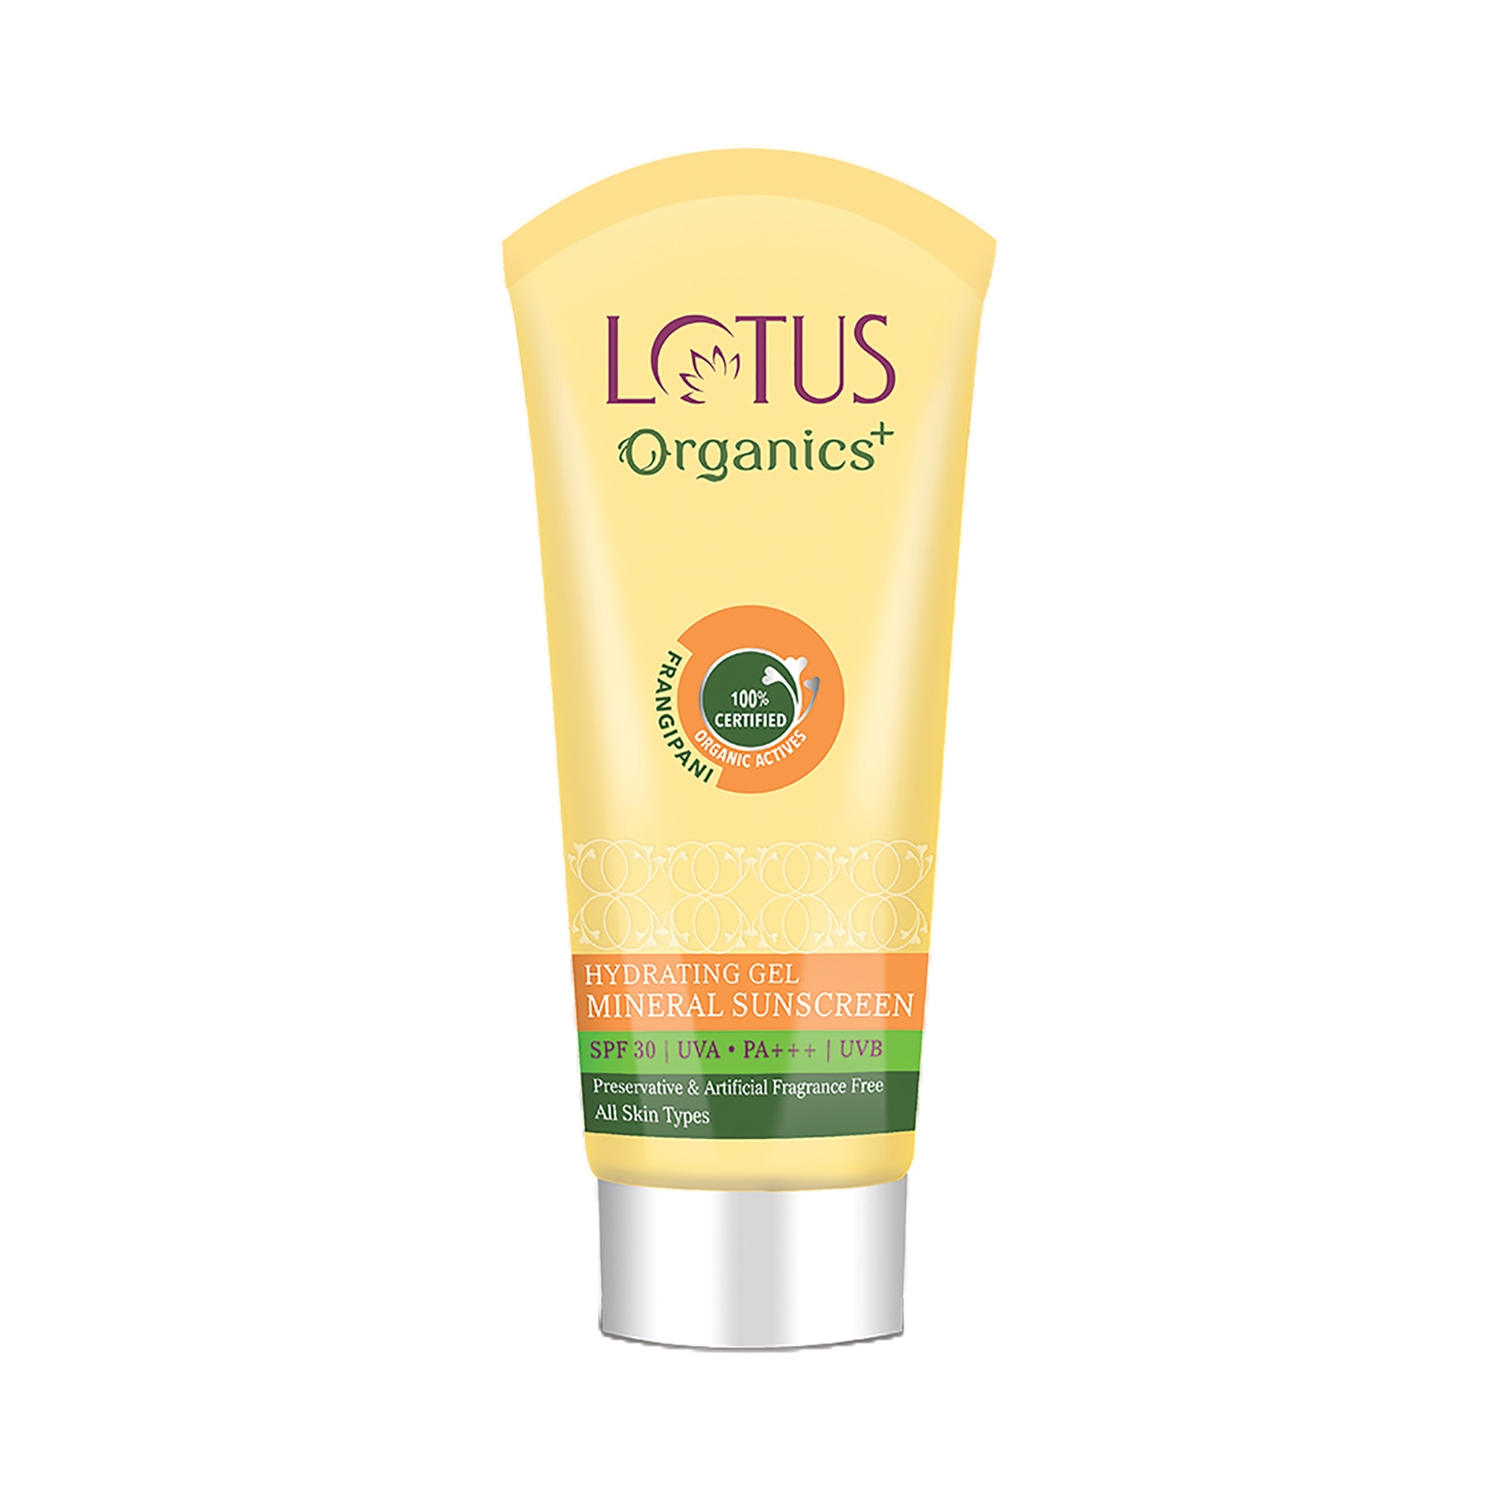 Lotus Organics | Lotus Organics Hydrating Gel Mineral Sunscreen SPF 30 Pa+++ (100g)